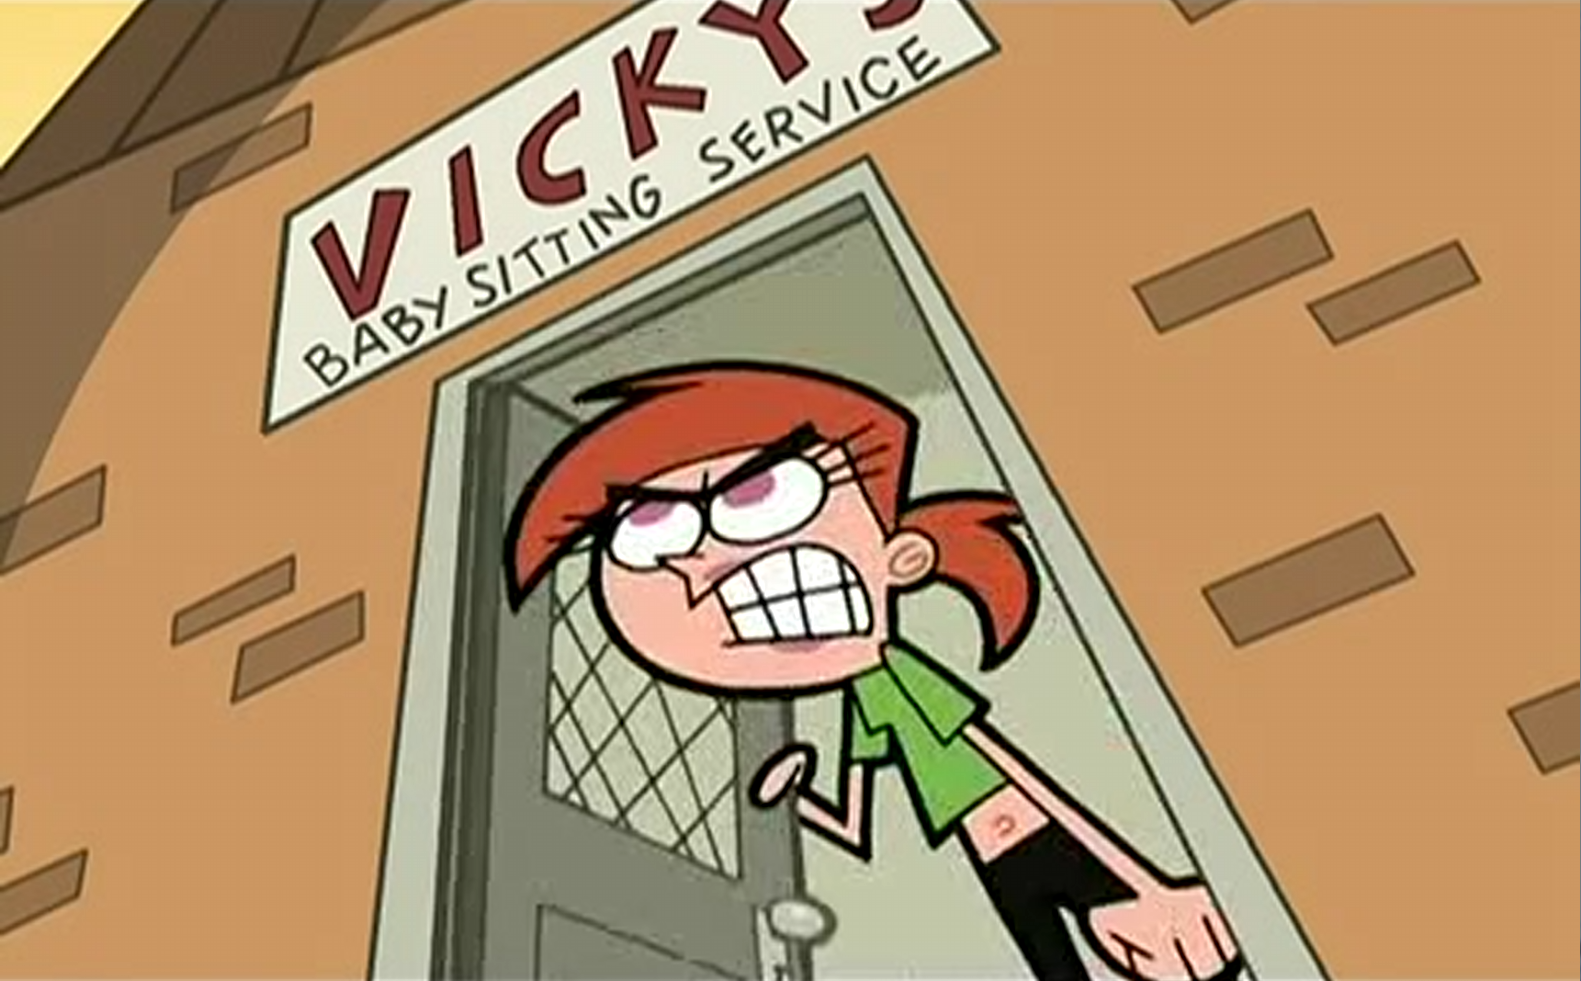 Vicky fairly odd parents voice